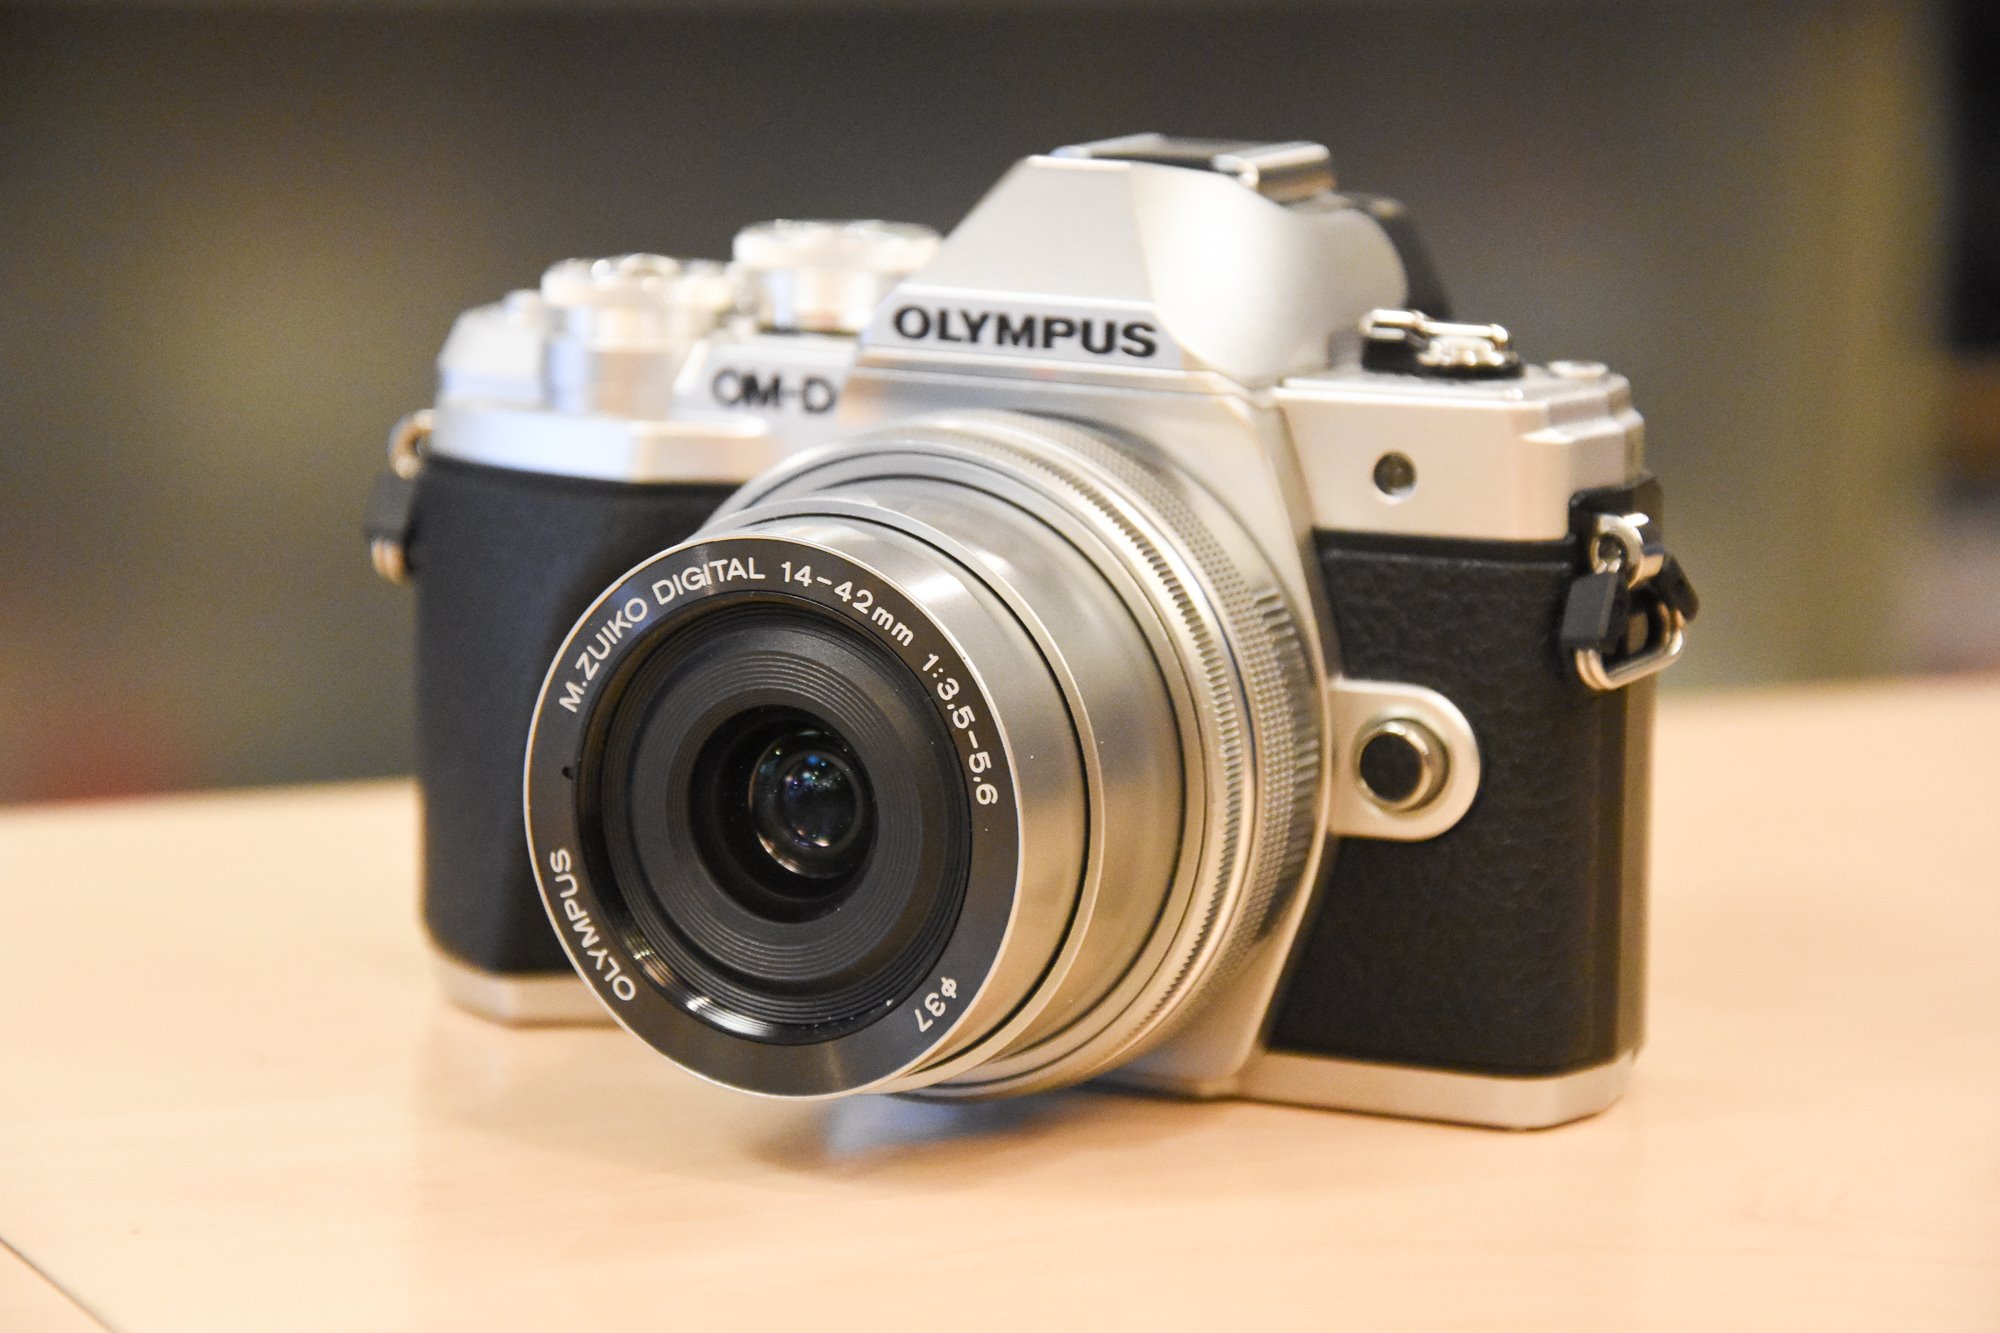 Olympus OM-D E-M10 Mark IV Camera with 14-42mm EZ Lens Kit - Silver